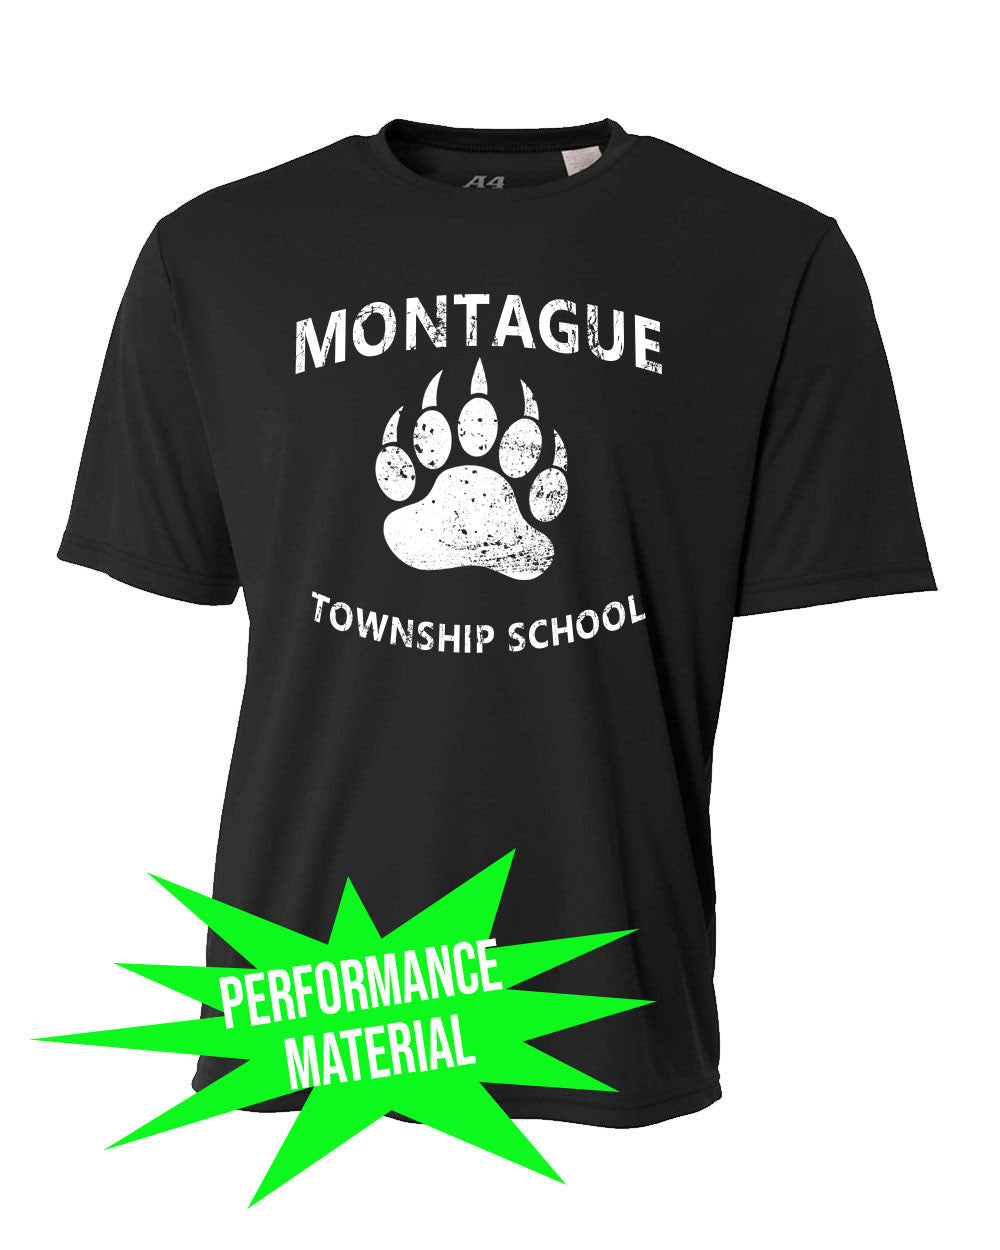 Montague Performance Material Design 3 T-Shirt